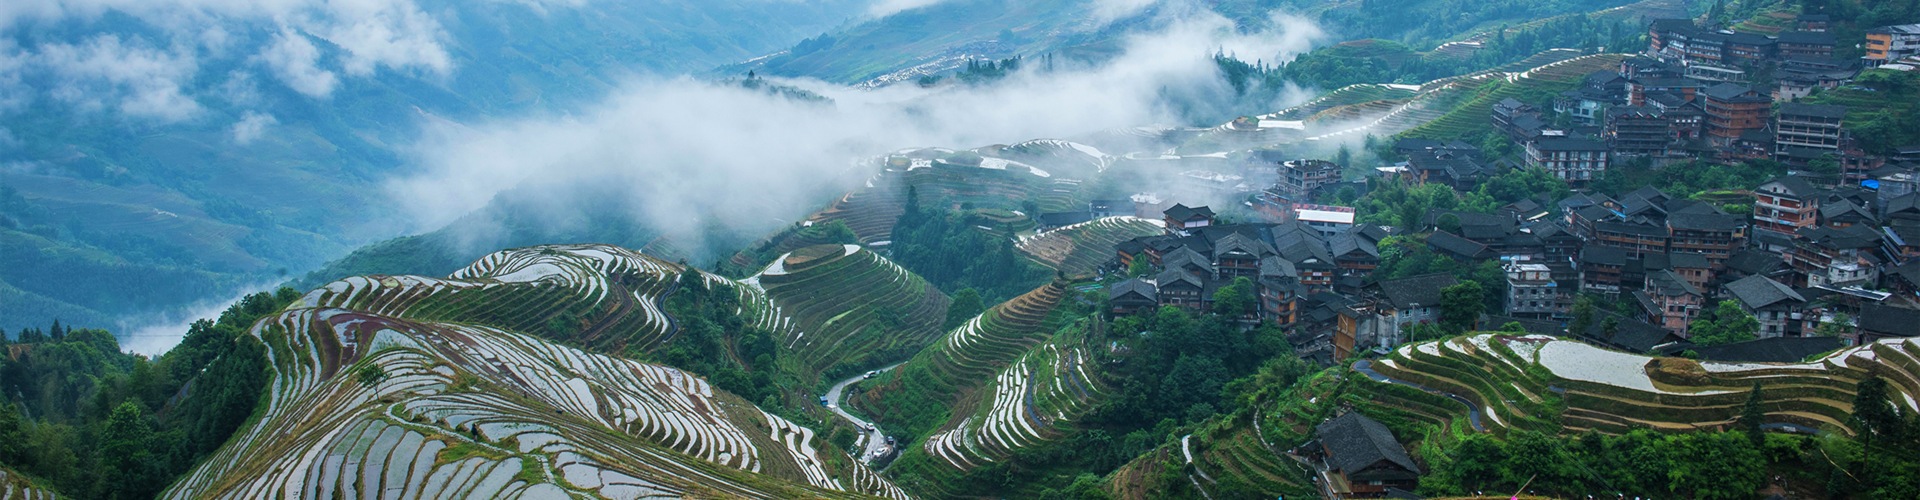 The Longji Rice Terraces - Breathtaking Scenery and Travel Tips